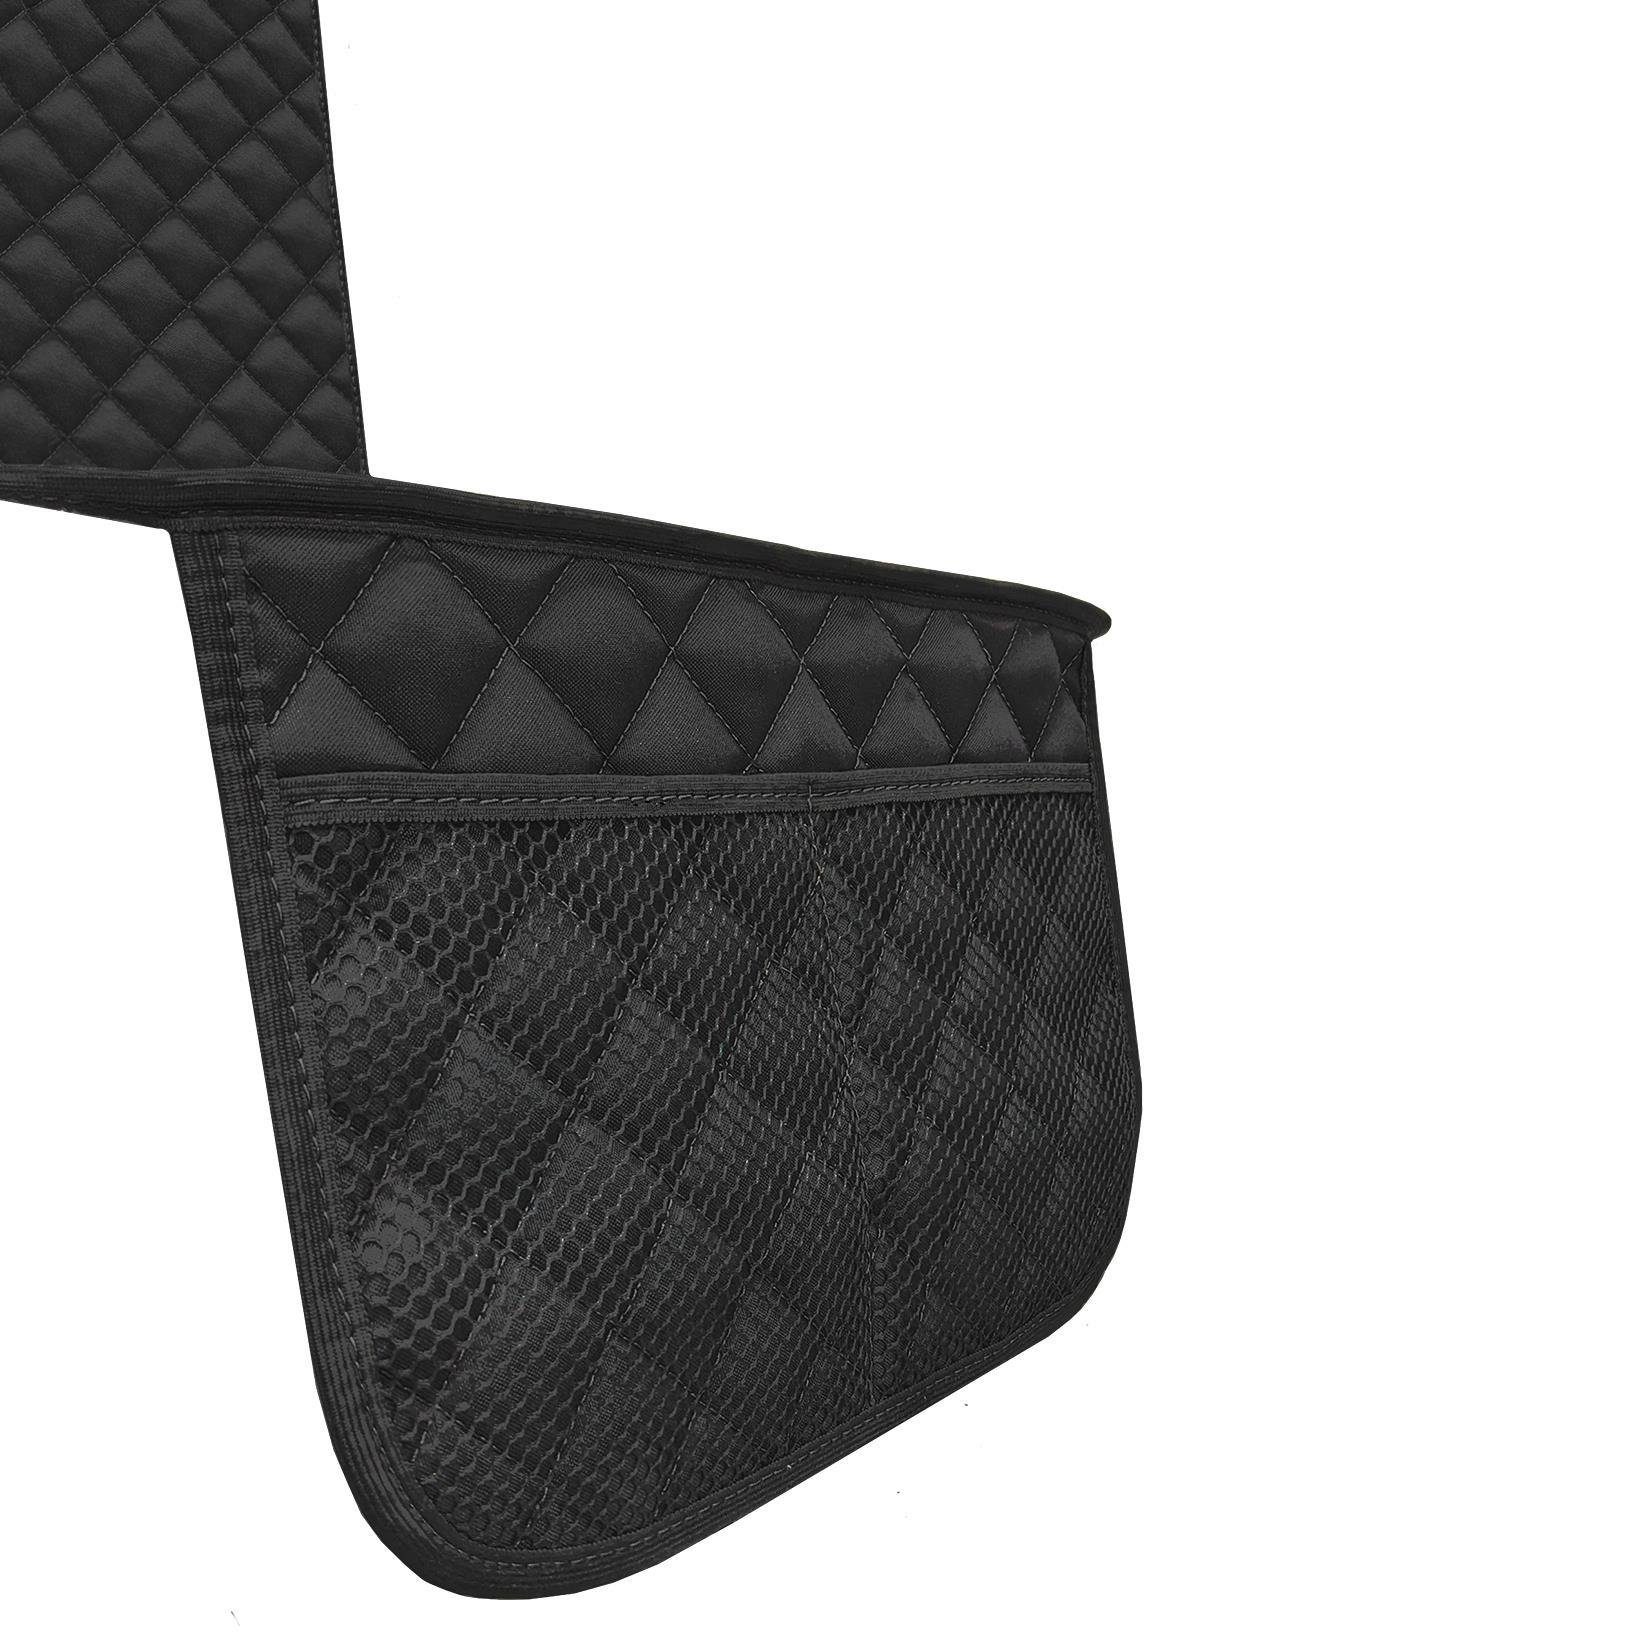 L & P Car Design Kindersitzunterlage Kindersitzschoner in schwarz ISOFIX  geeignet Cordura Material, 2 Stück